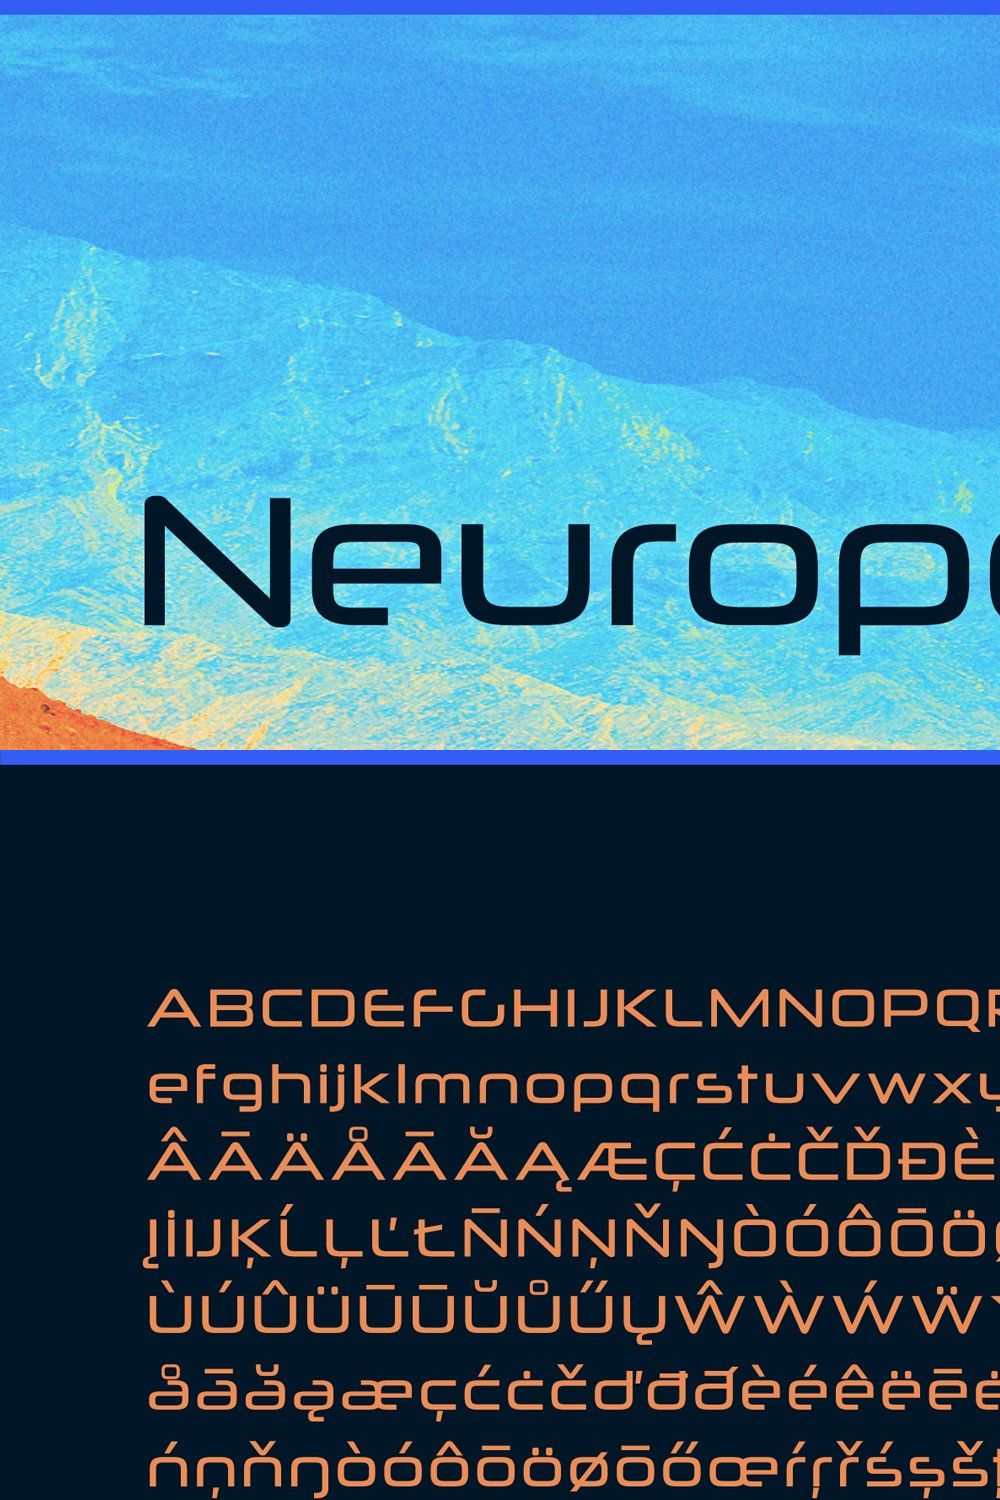 Neuropolitical pinterest preview image.